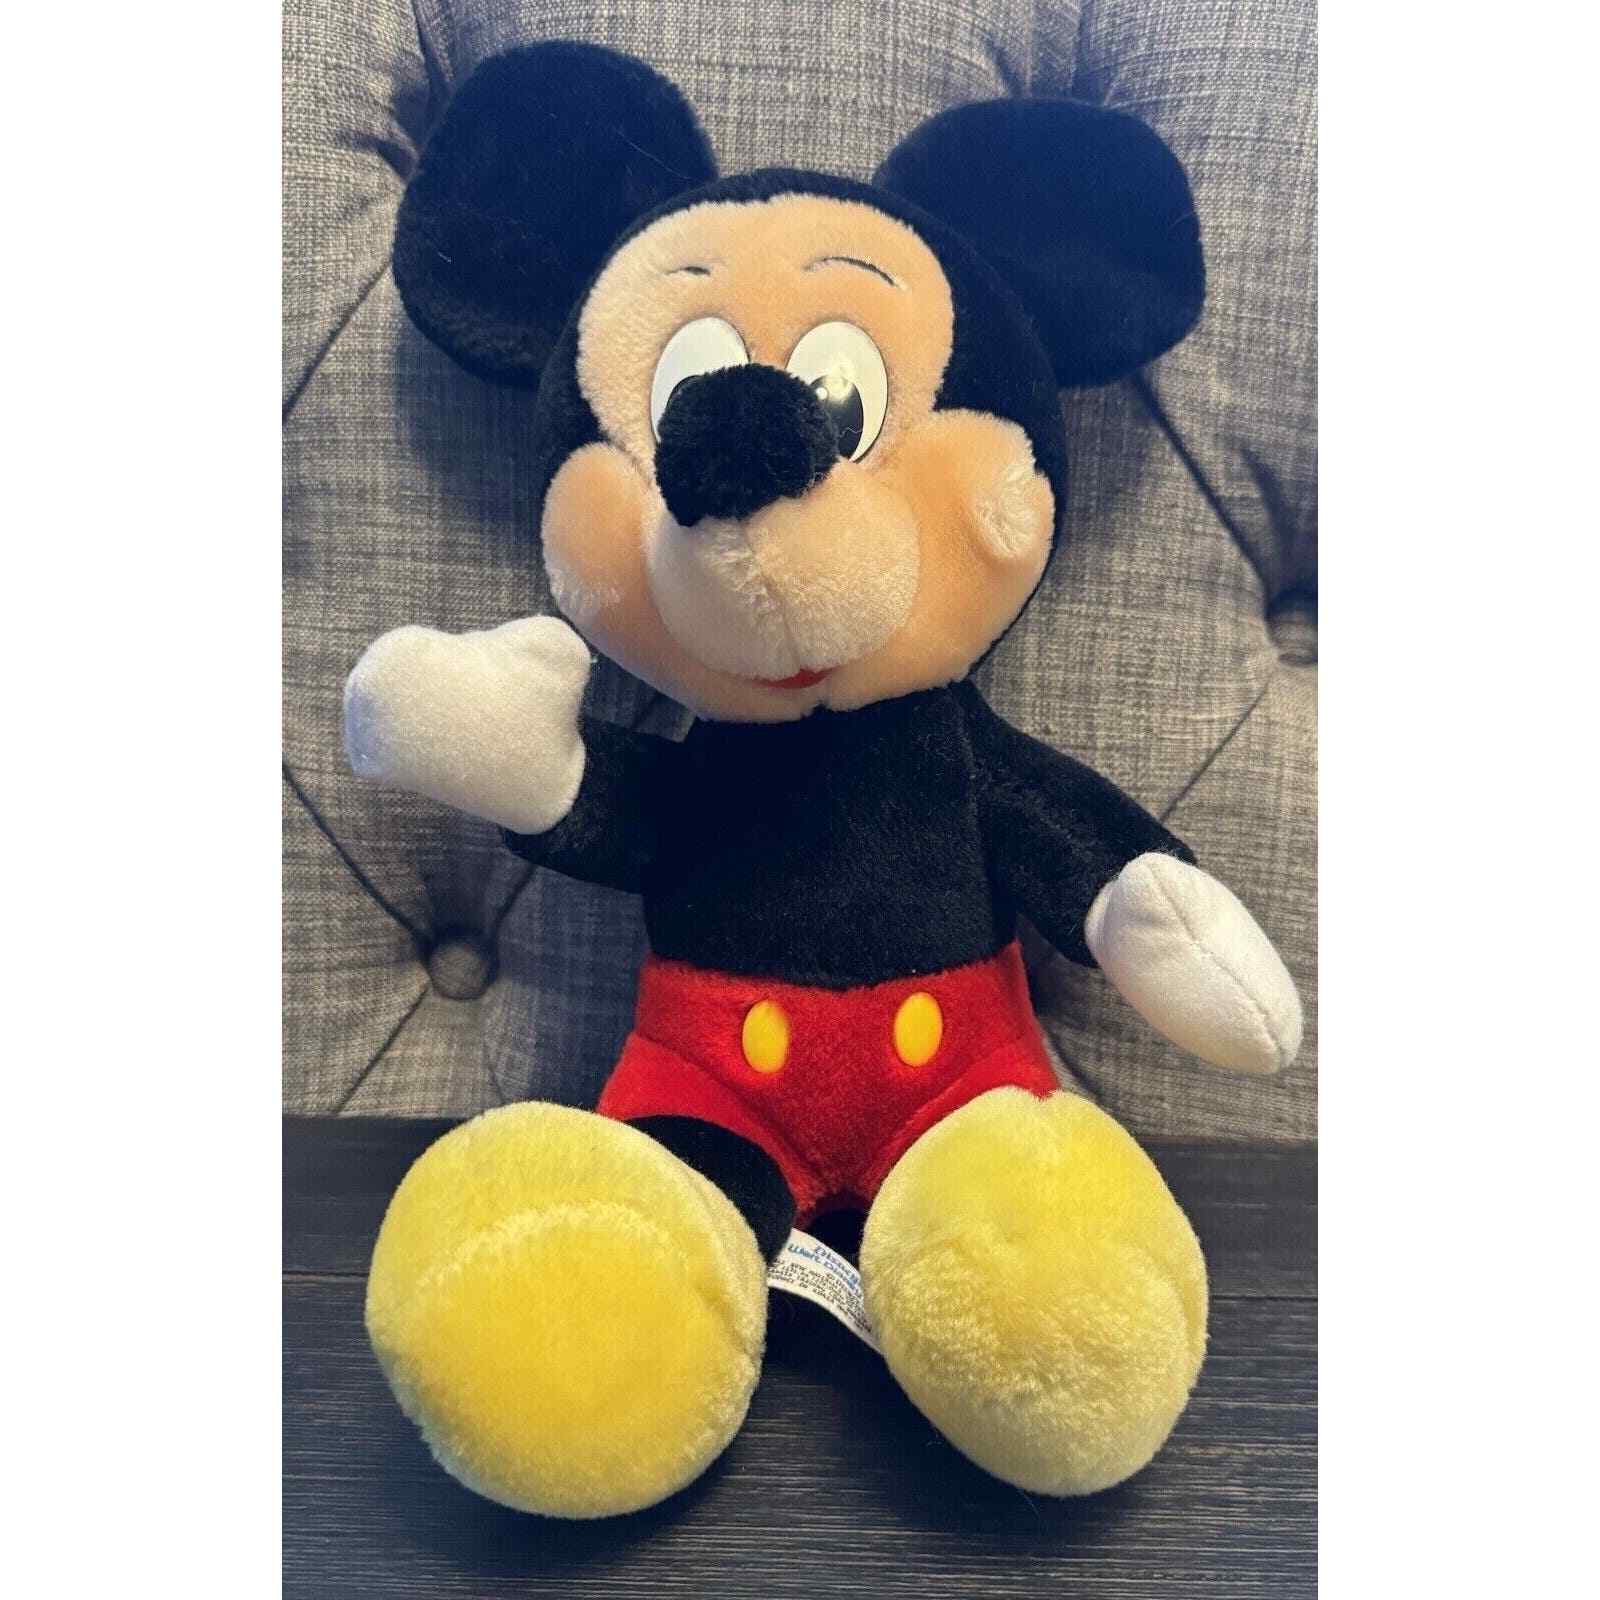 Vintage 12” Disney Parks Mickey Mouse Plush